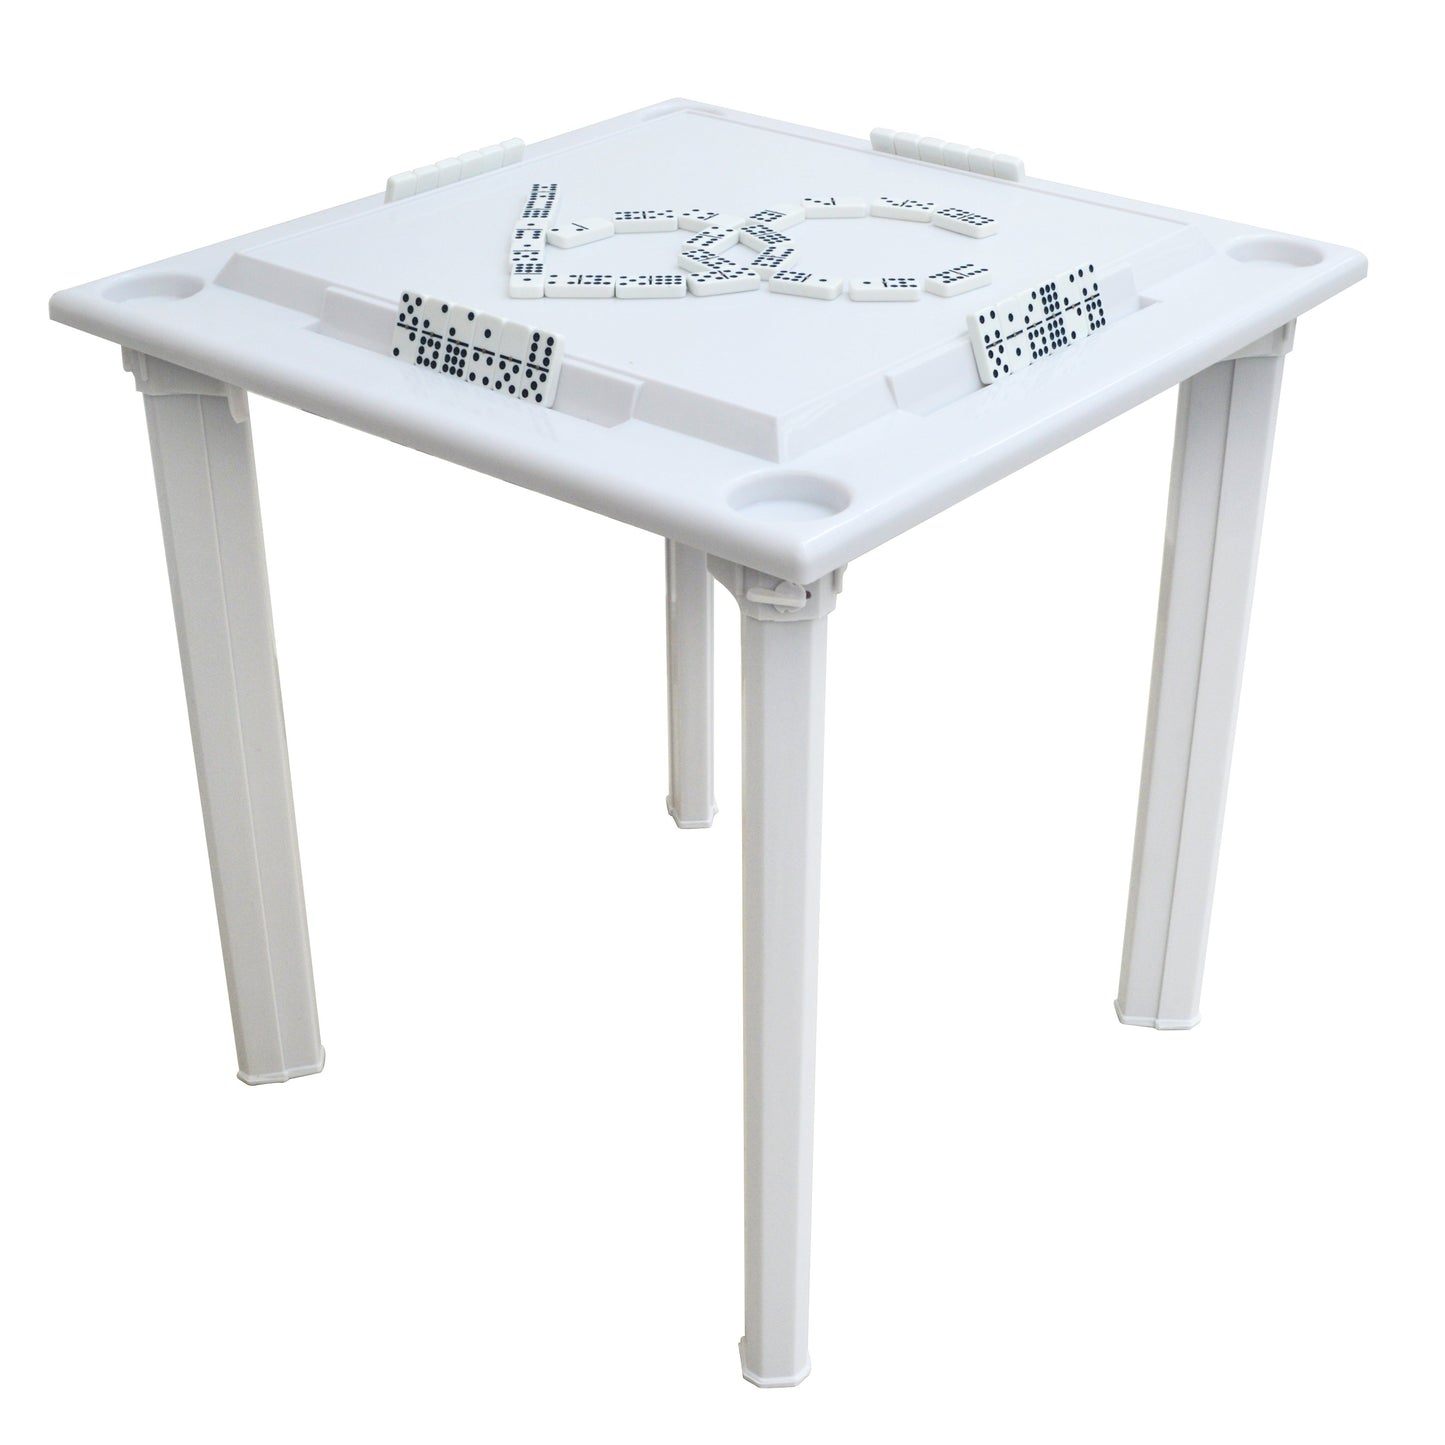 
                  
                    Bene Casa waterproof plastic game table with drinks holder, built in tile rack, removable leg game table, indoor or outdoor portable game table
                  
                